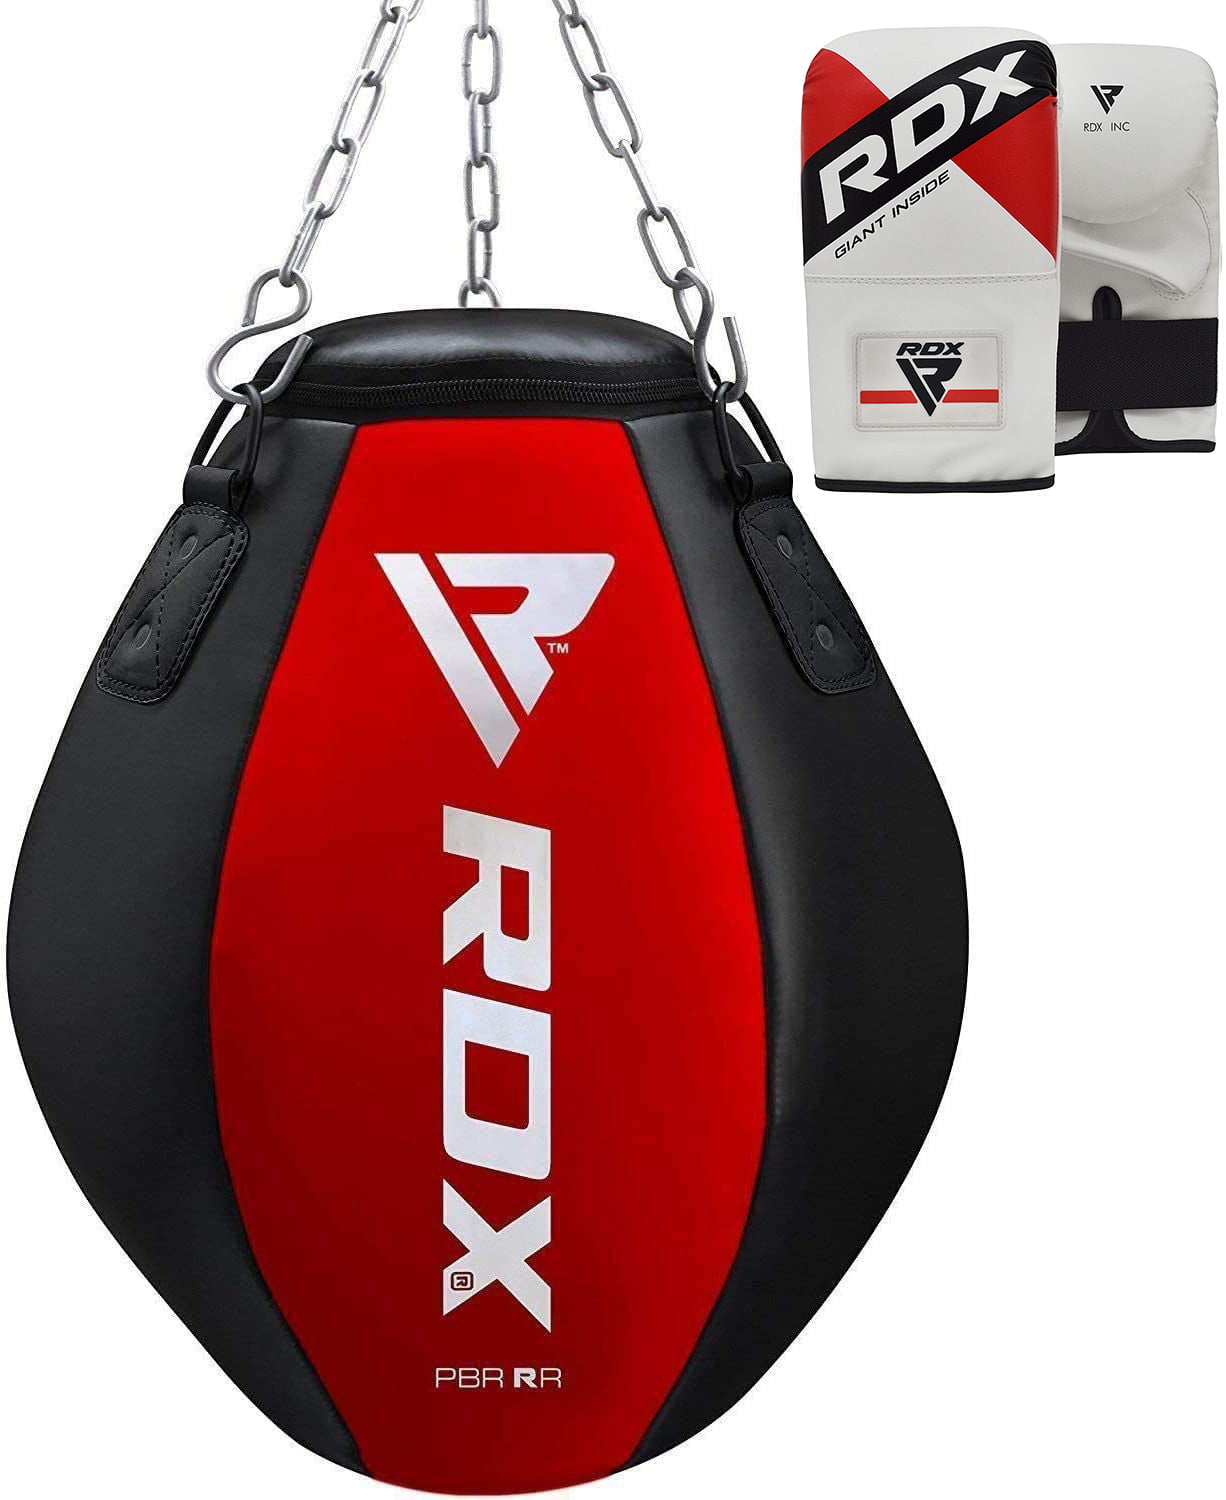 Uppercut seat Metal Bracket Punch Bag MMA kick Boxing Training Pad Bag 